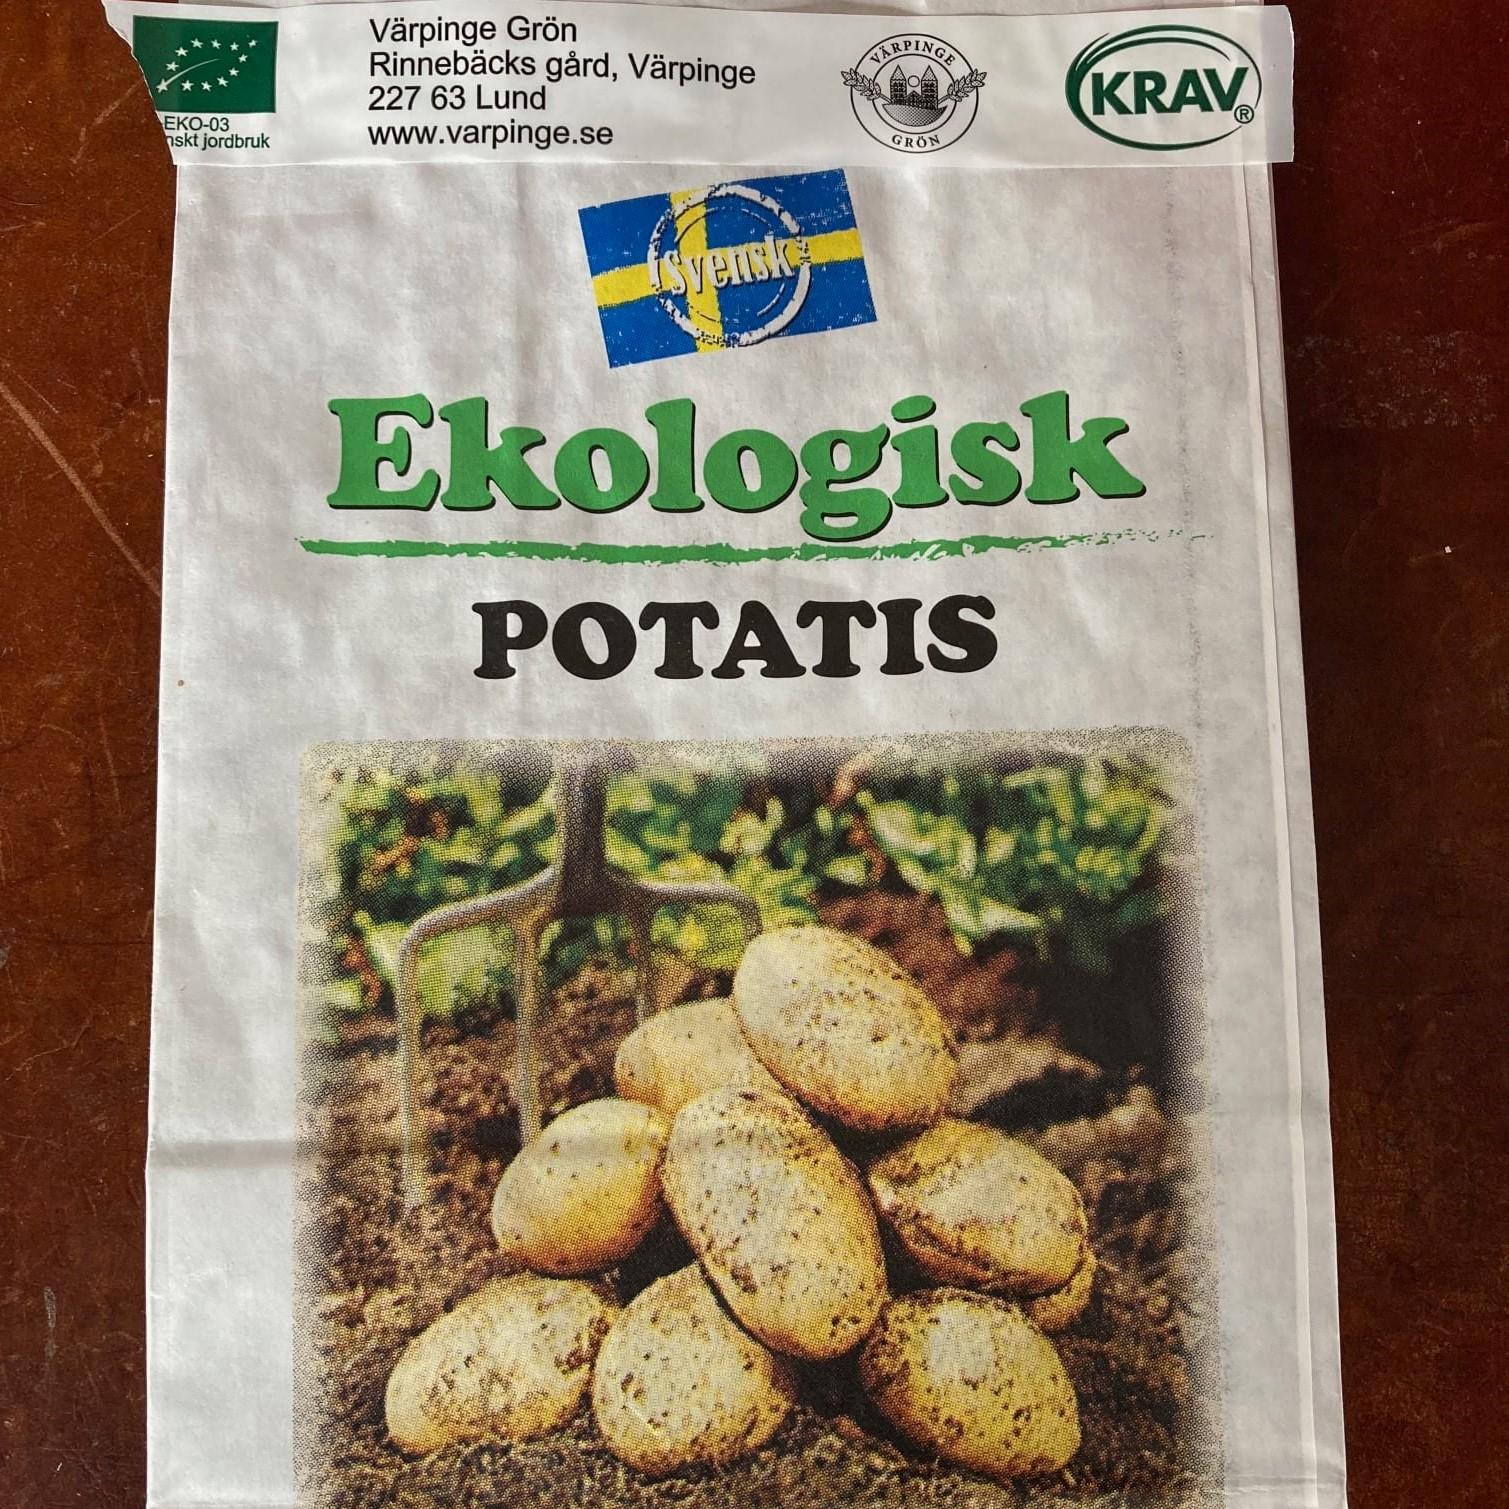 Värpinge Grön's Potatoes'